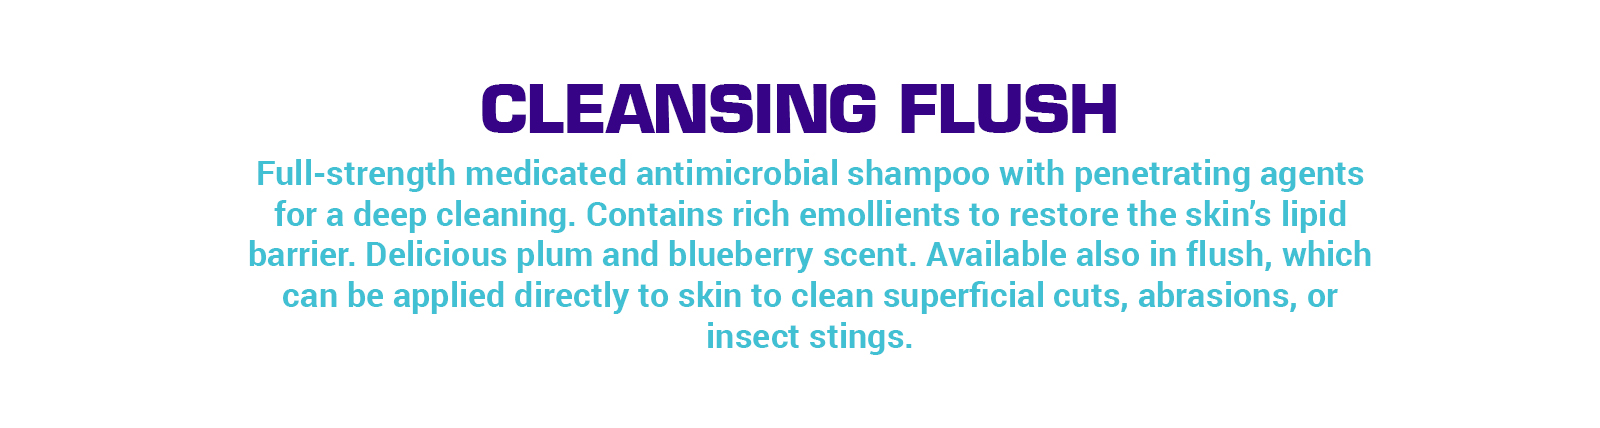 cleansing-flush